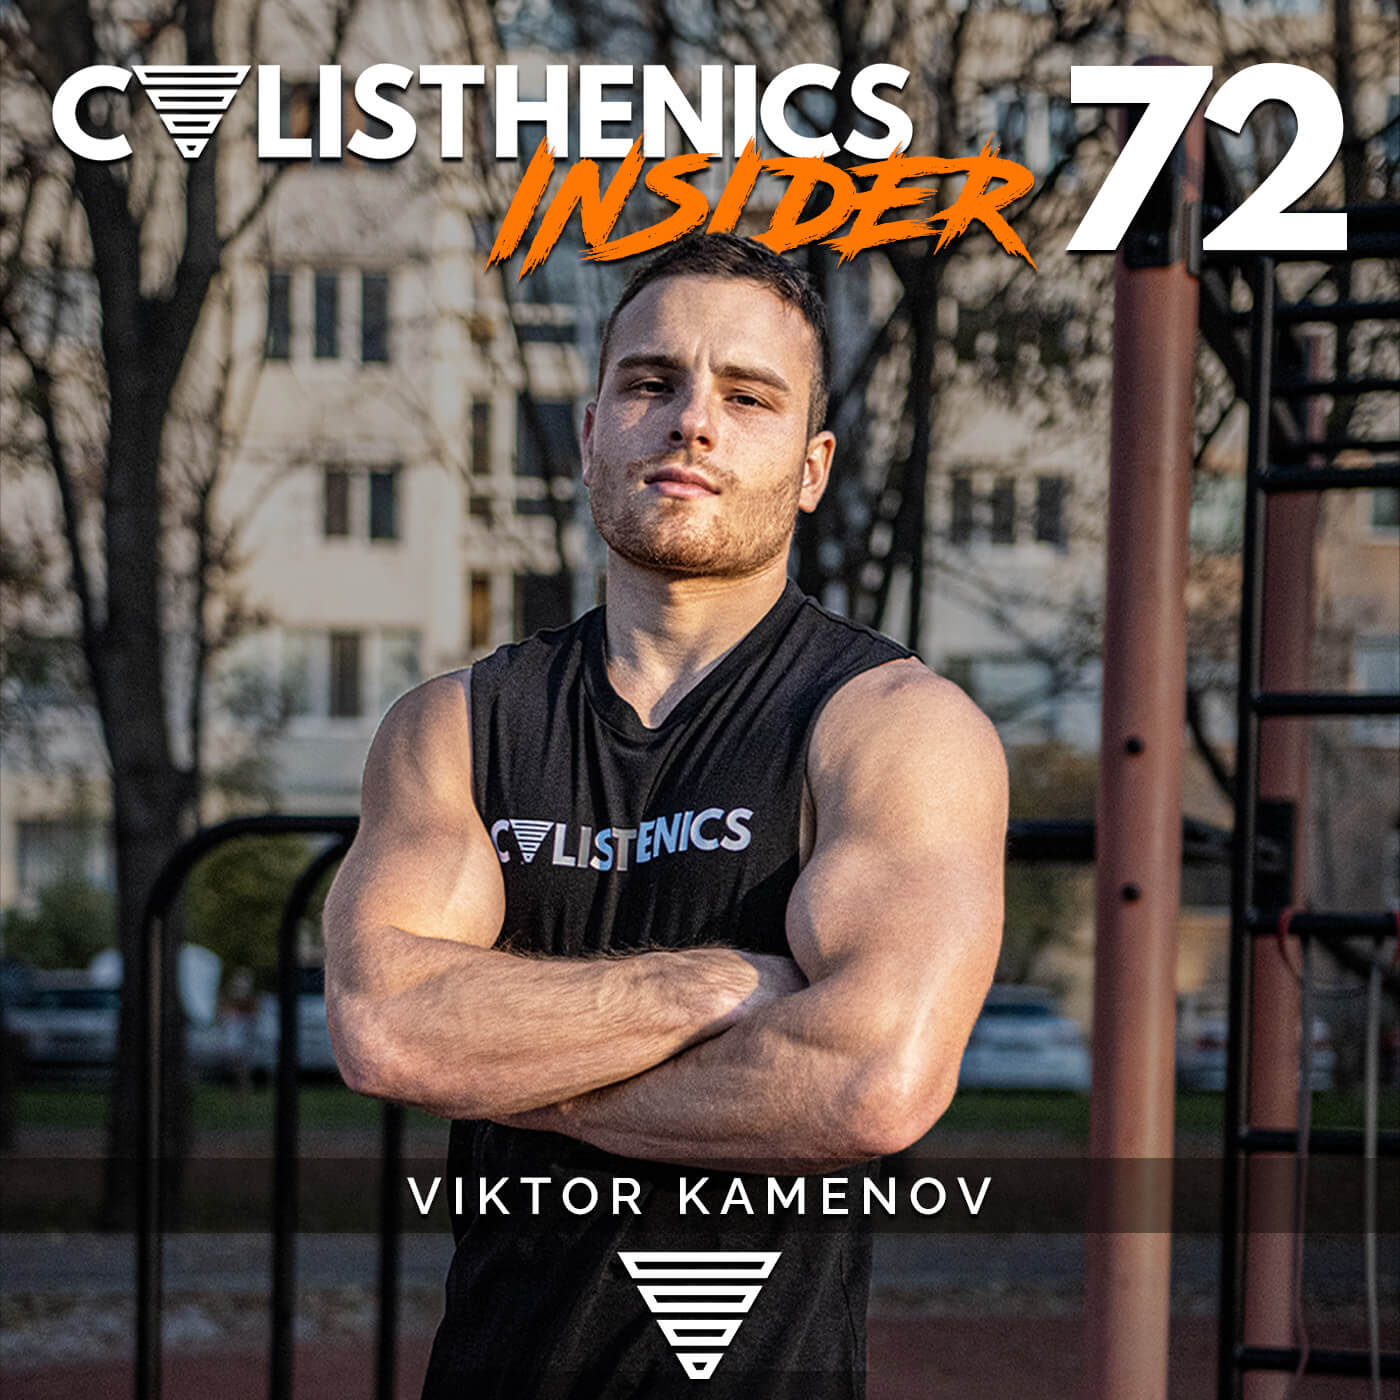 Viktor Kamenov: His Injury, Advice & Insights for Progress | Calisthenics Insider Podcast #72